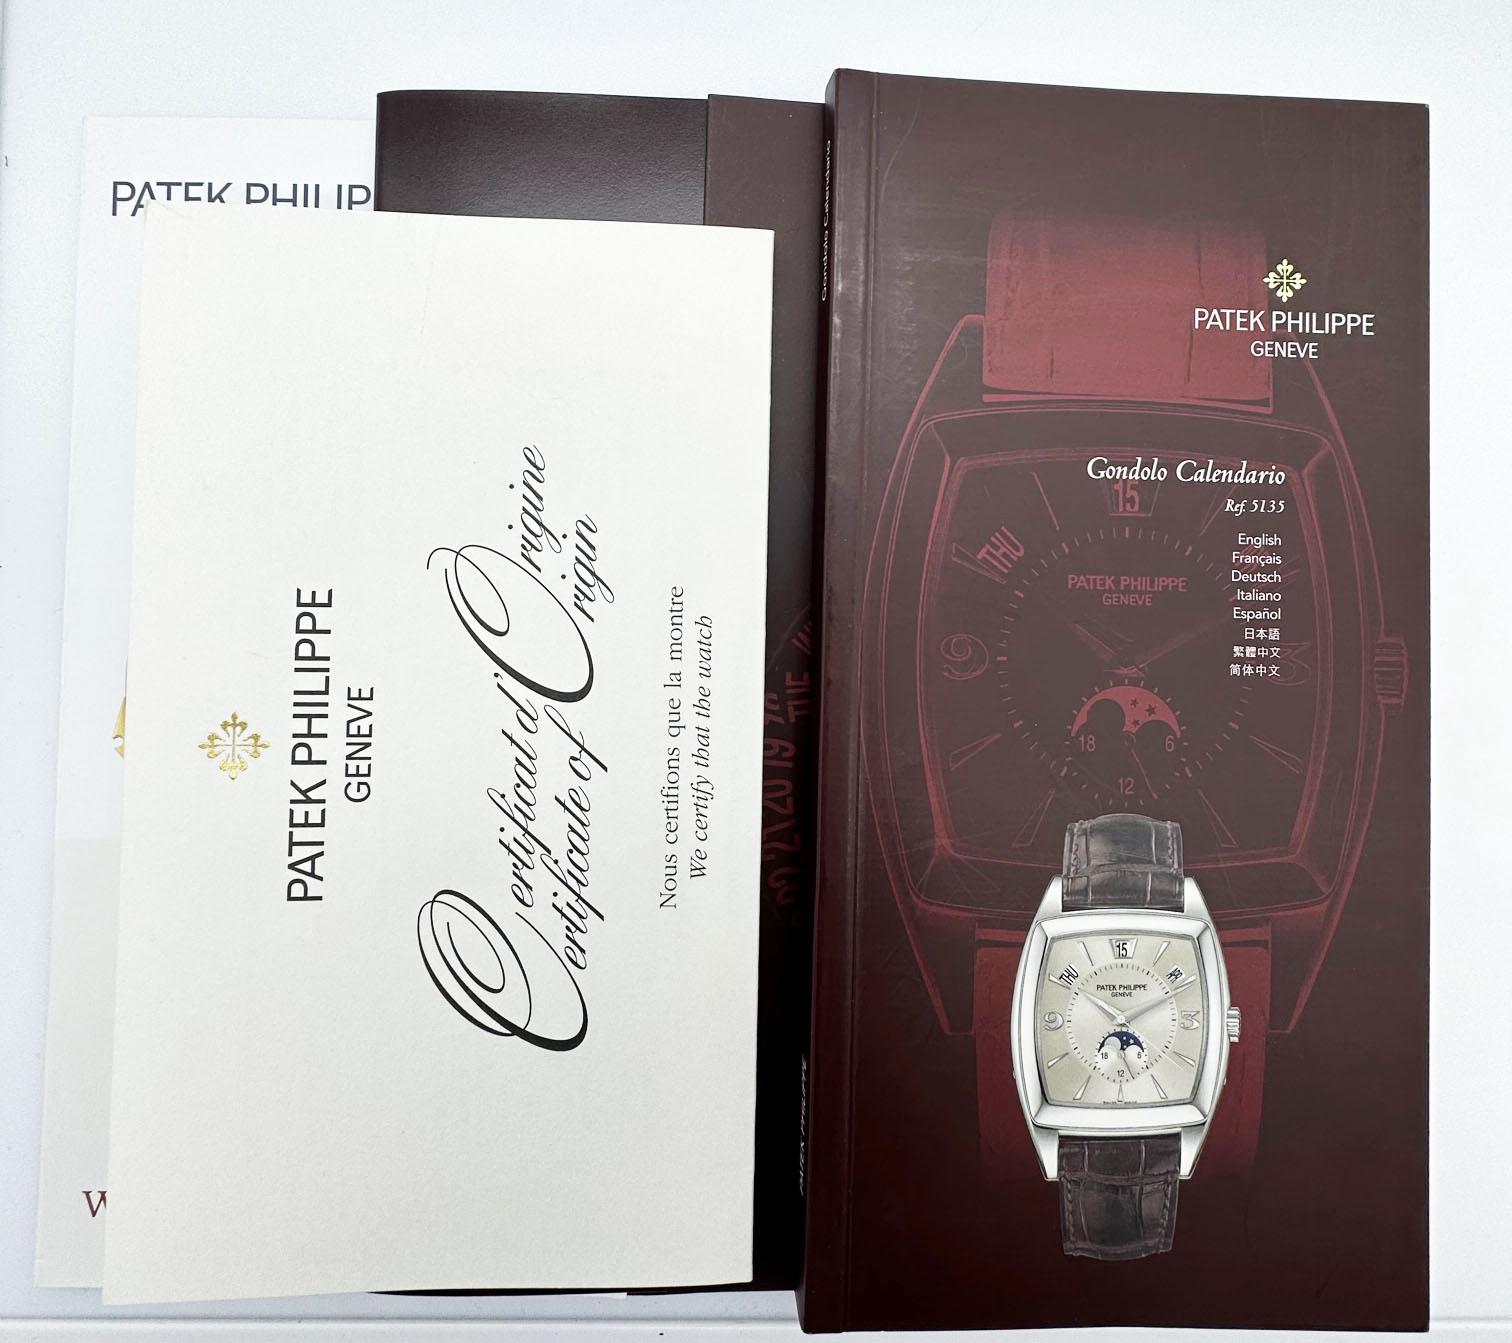 Patek 5135R Philippe Complicated Gondolo Calendario 18K Rose Gold Box Paper For Sale 3